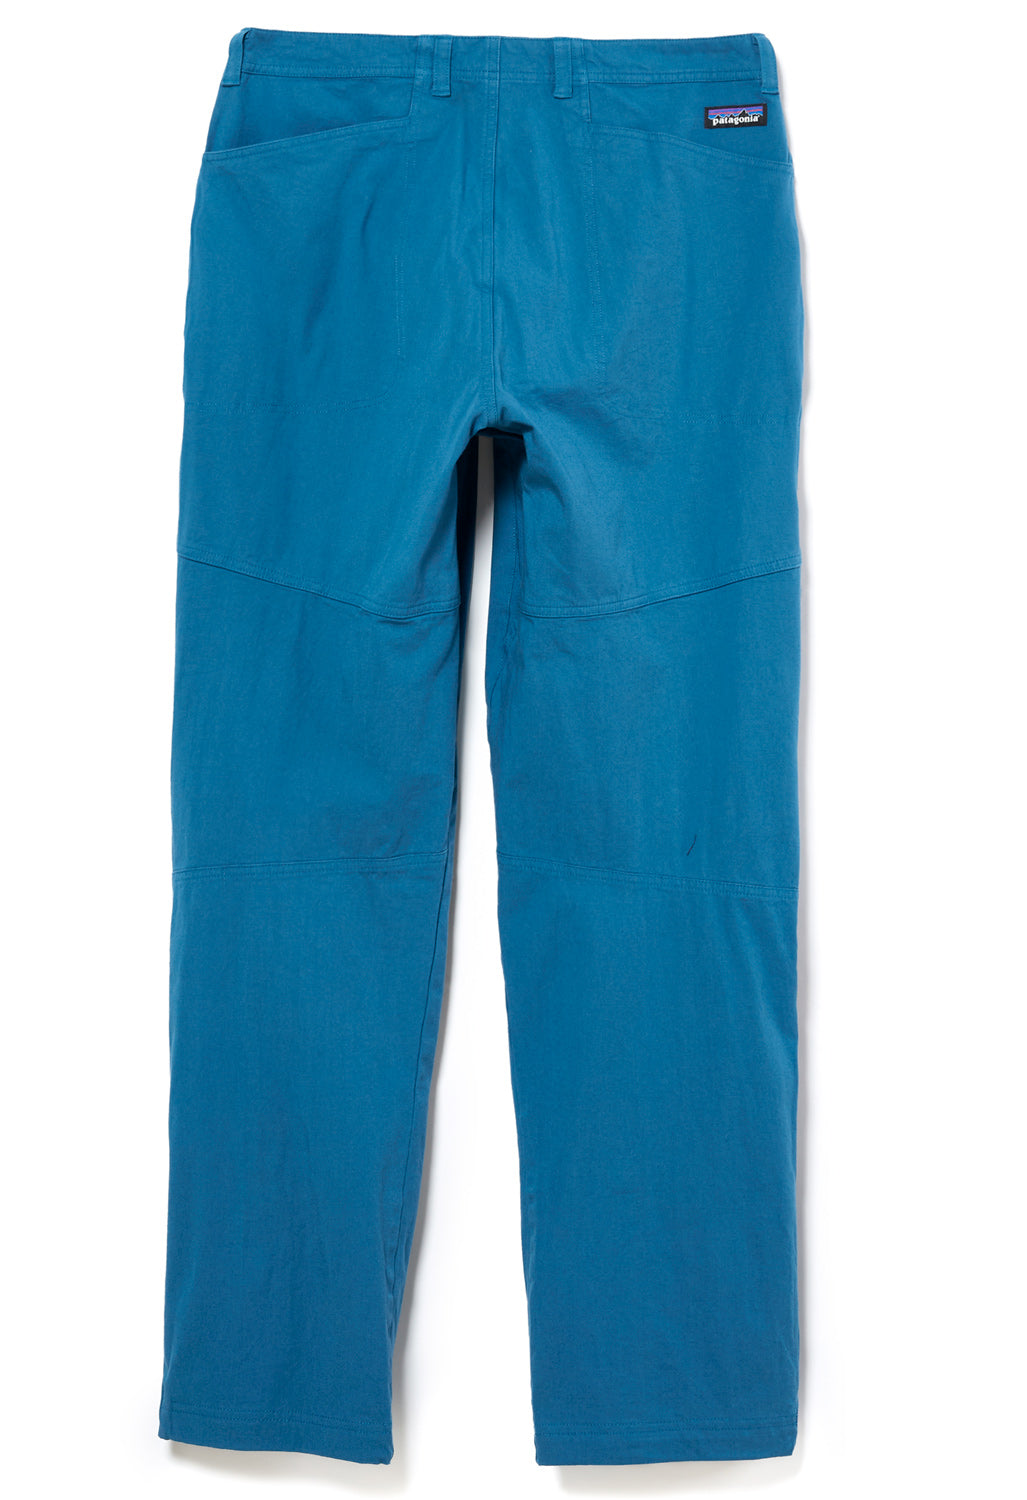 Patagonia Men's Venga Rock Pants (Reg) - Wavy Blue